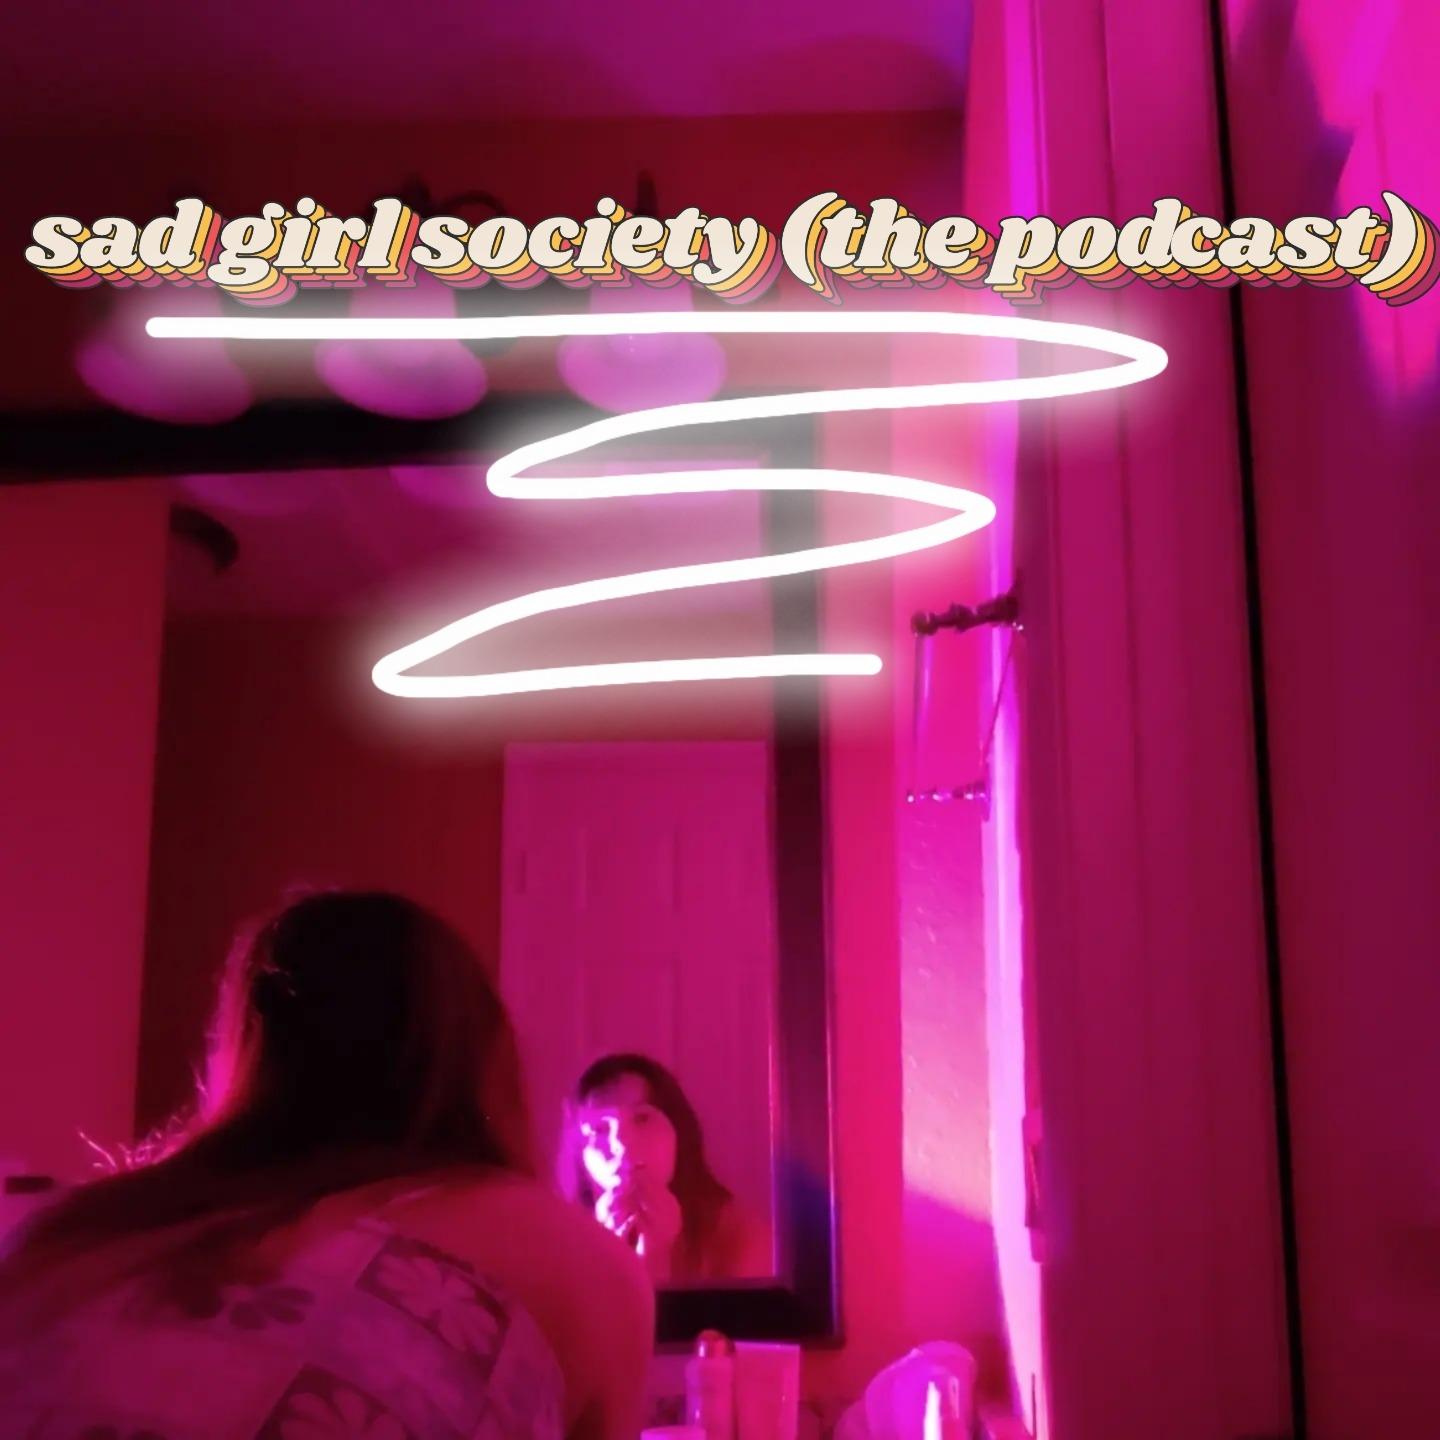 Sad Girl Society (the podcast)